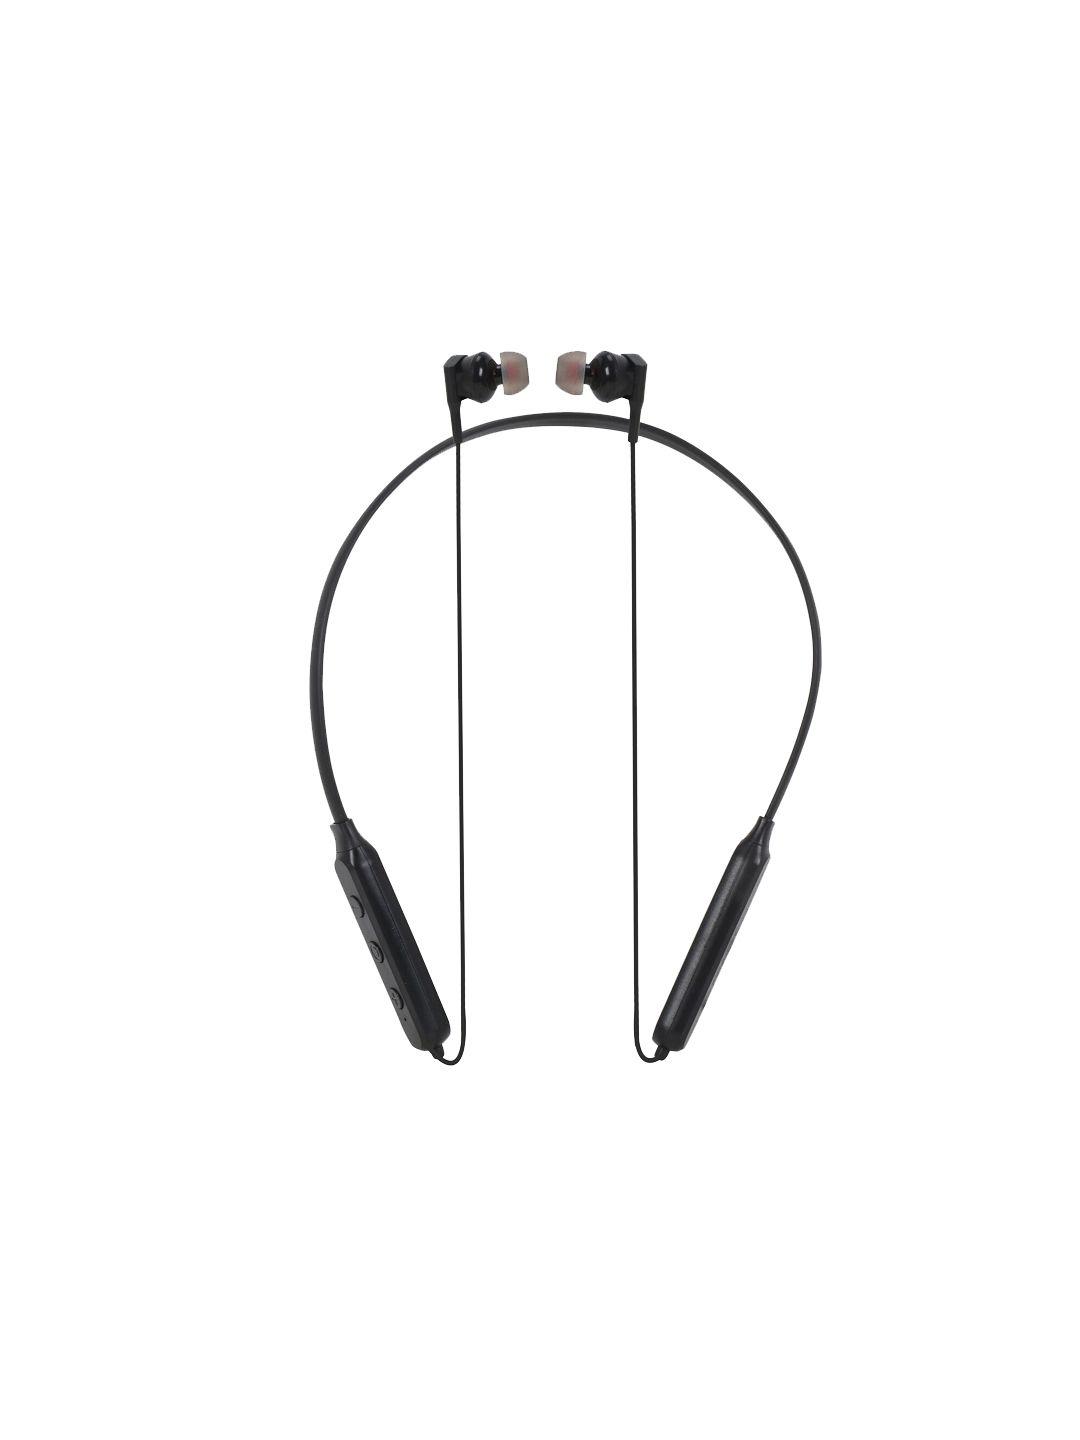 swagme black dual tone wireless neckband earphone with bluetooth